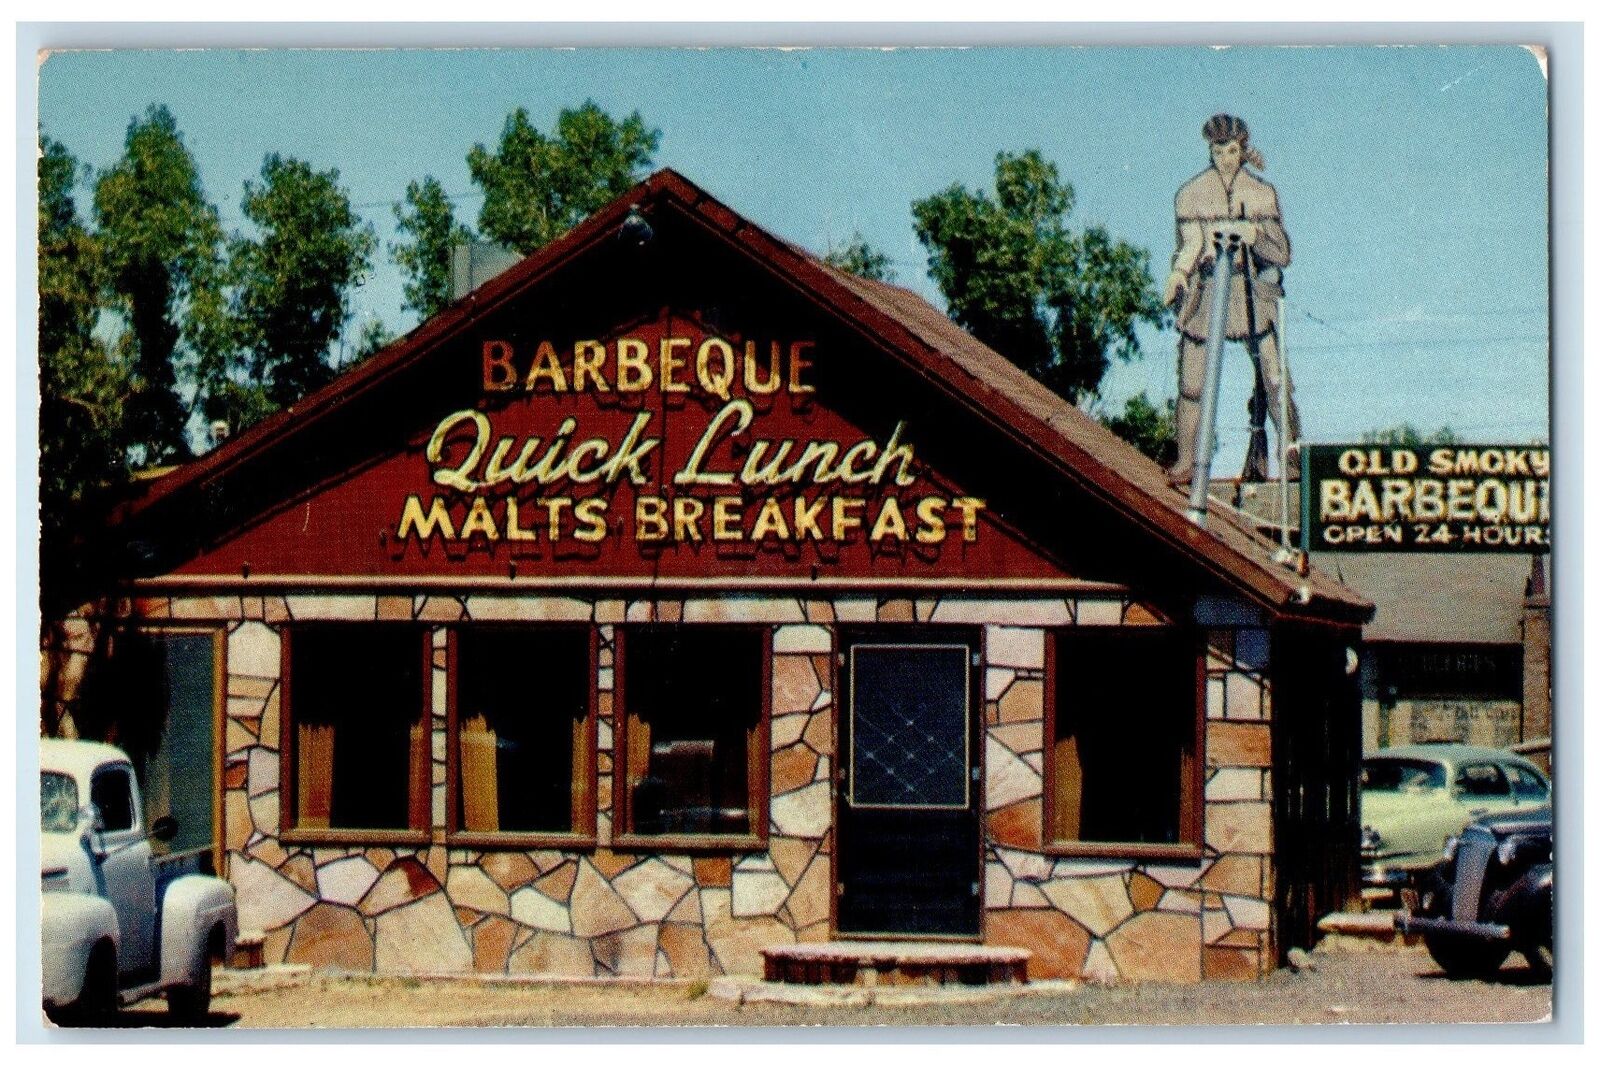 William Arizona AZ Postcard Old Smokey Barbeque Restaurant Exterior c1940's Cars